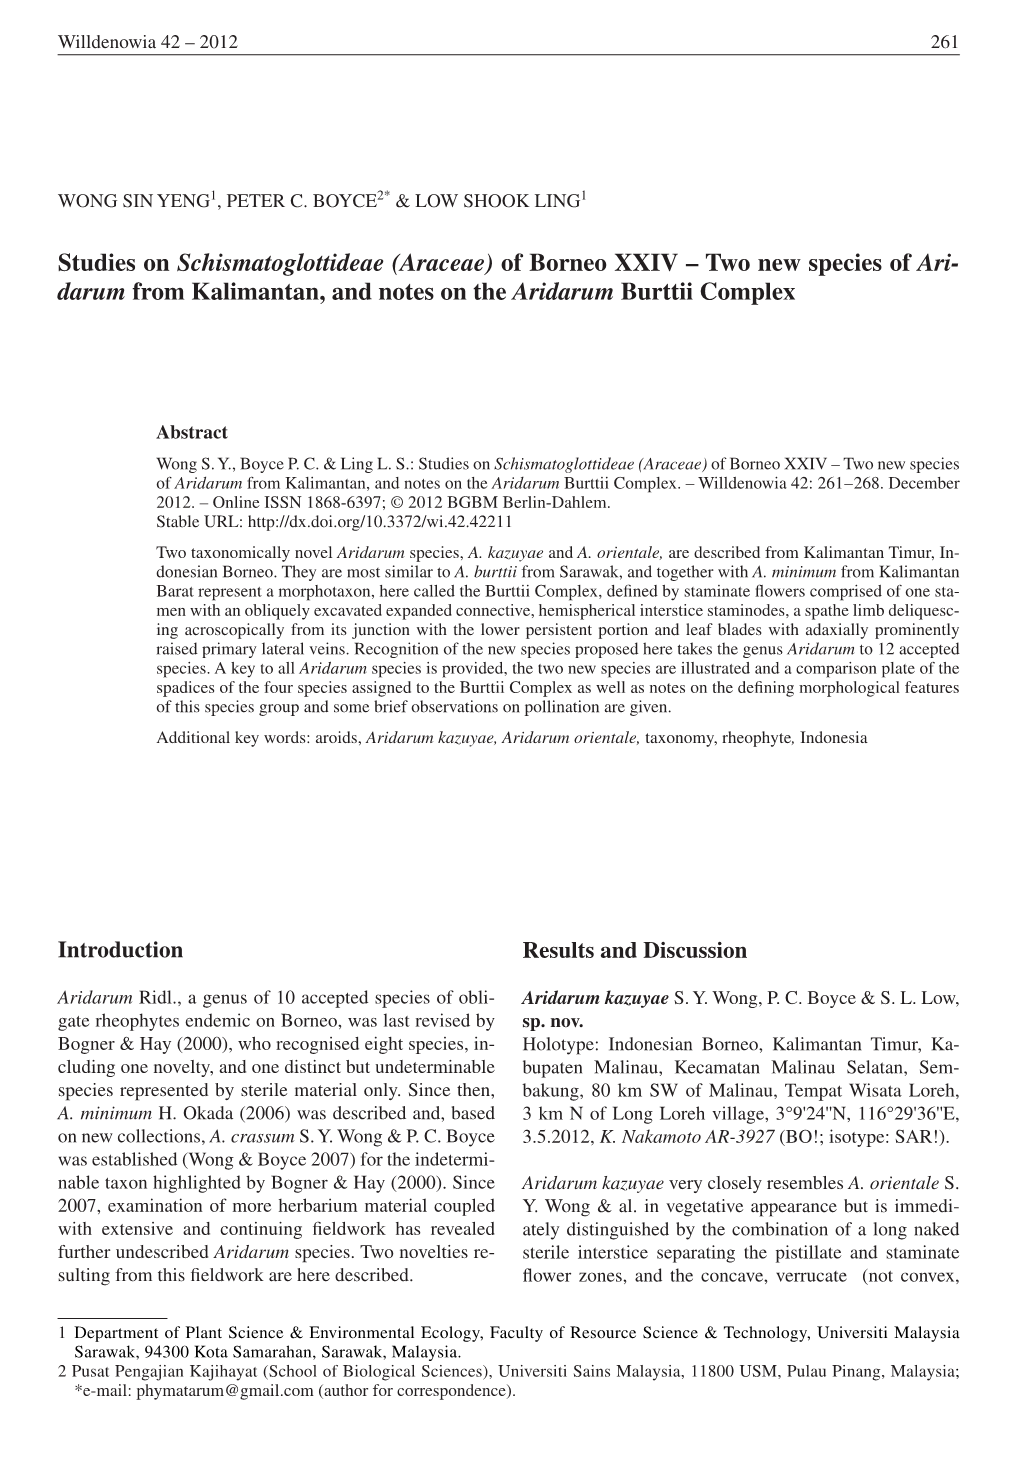 Studies on Schismatoglottideae (Araceae) of Borneo XXIV – Two New Species of Ari- Darum from Kalimantan, and Notes on the Aridarum Burttii Complex